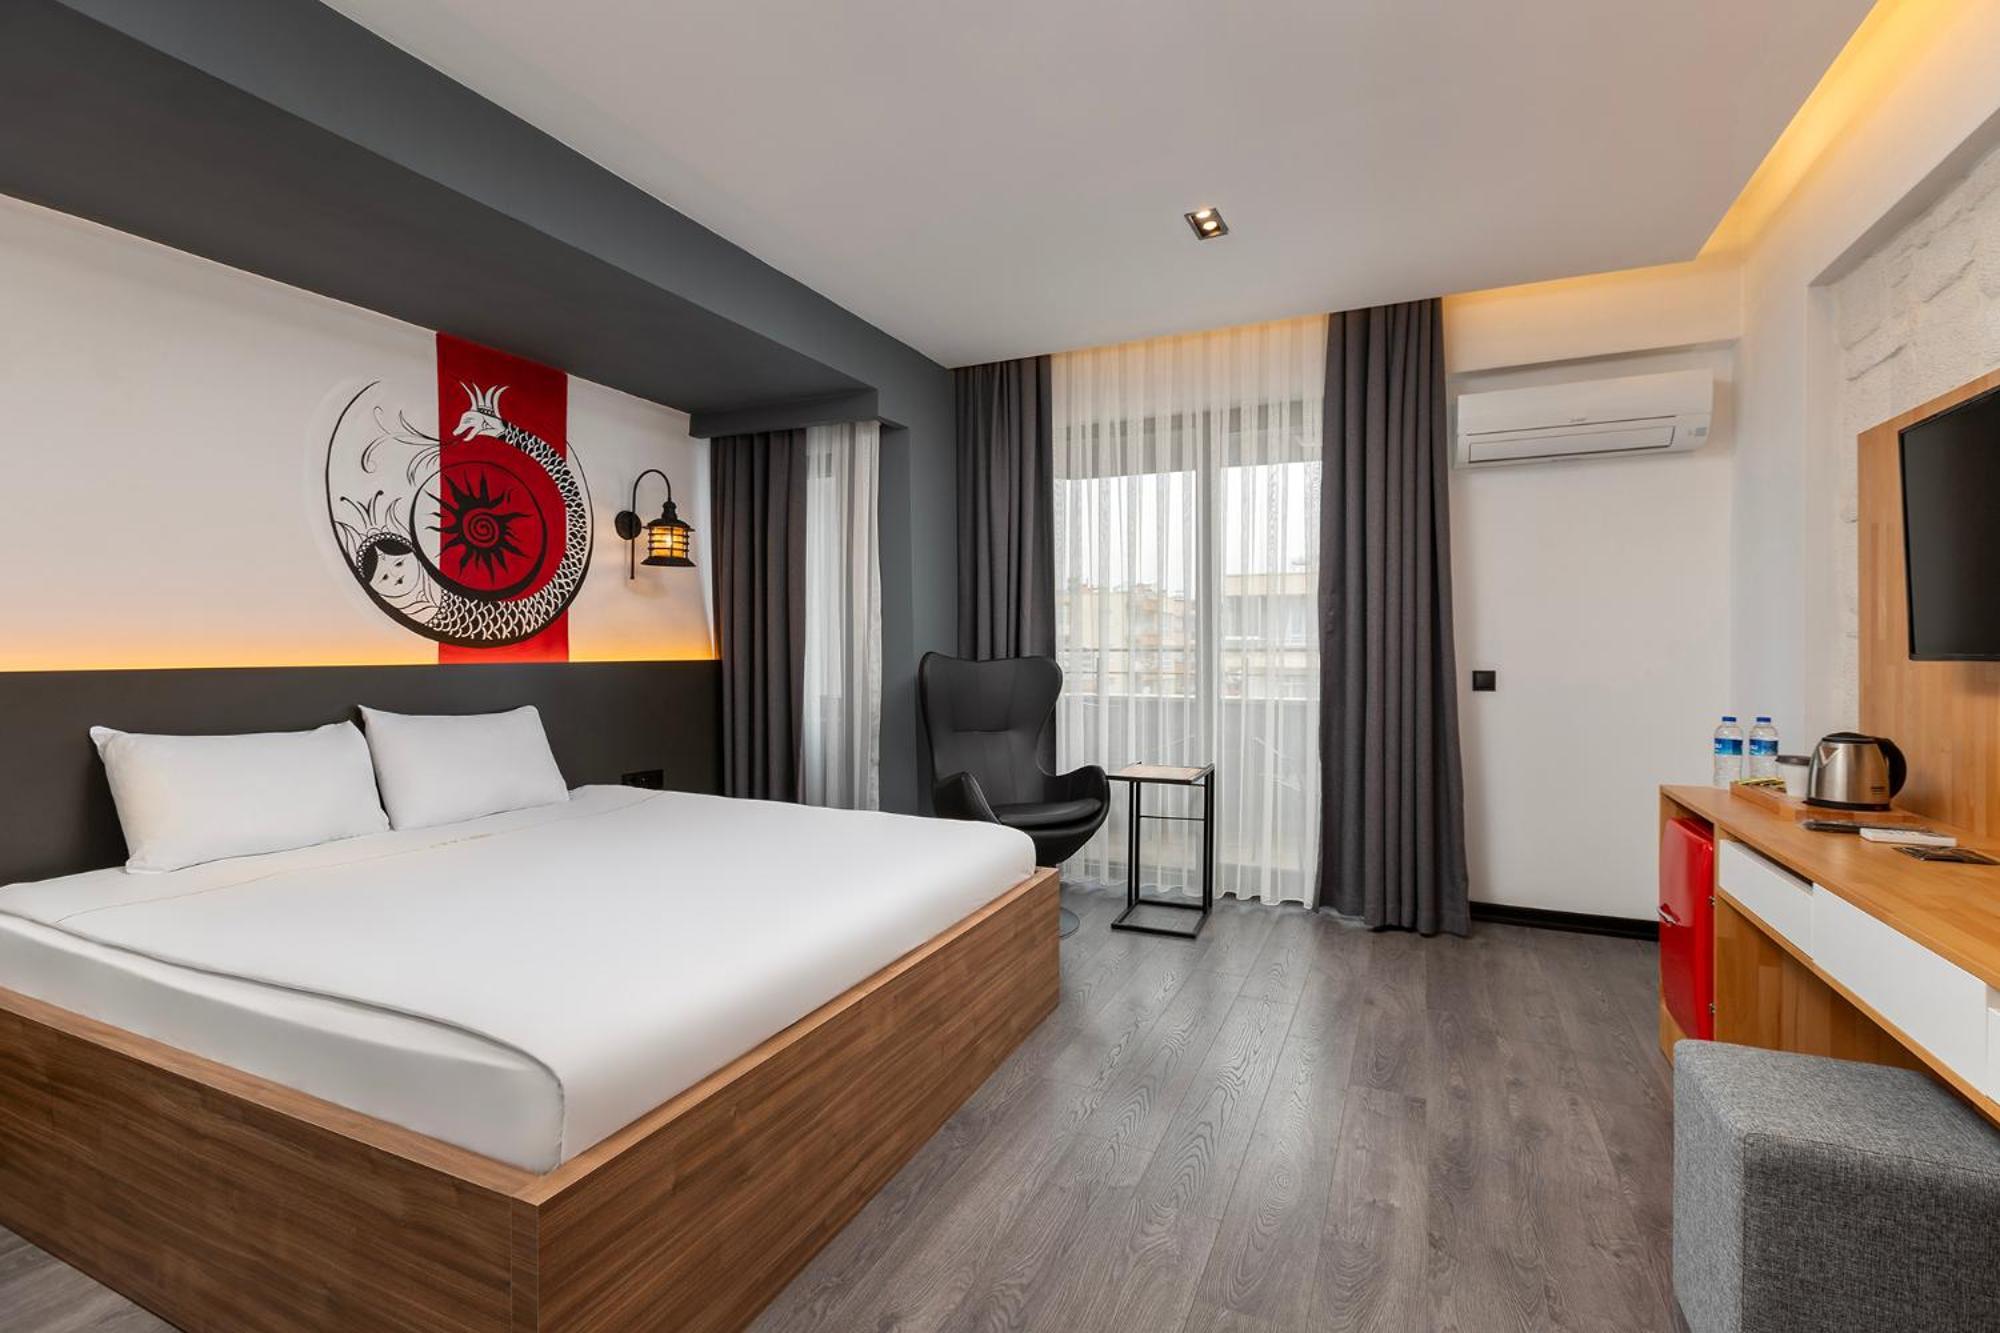 Afflon Hotels Loft City Antalya Exterior photo